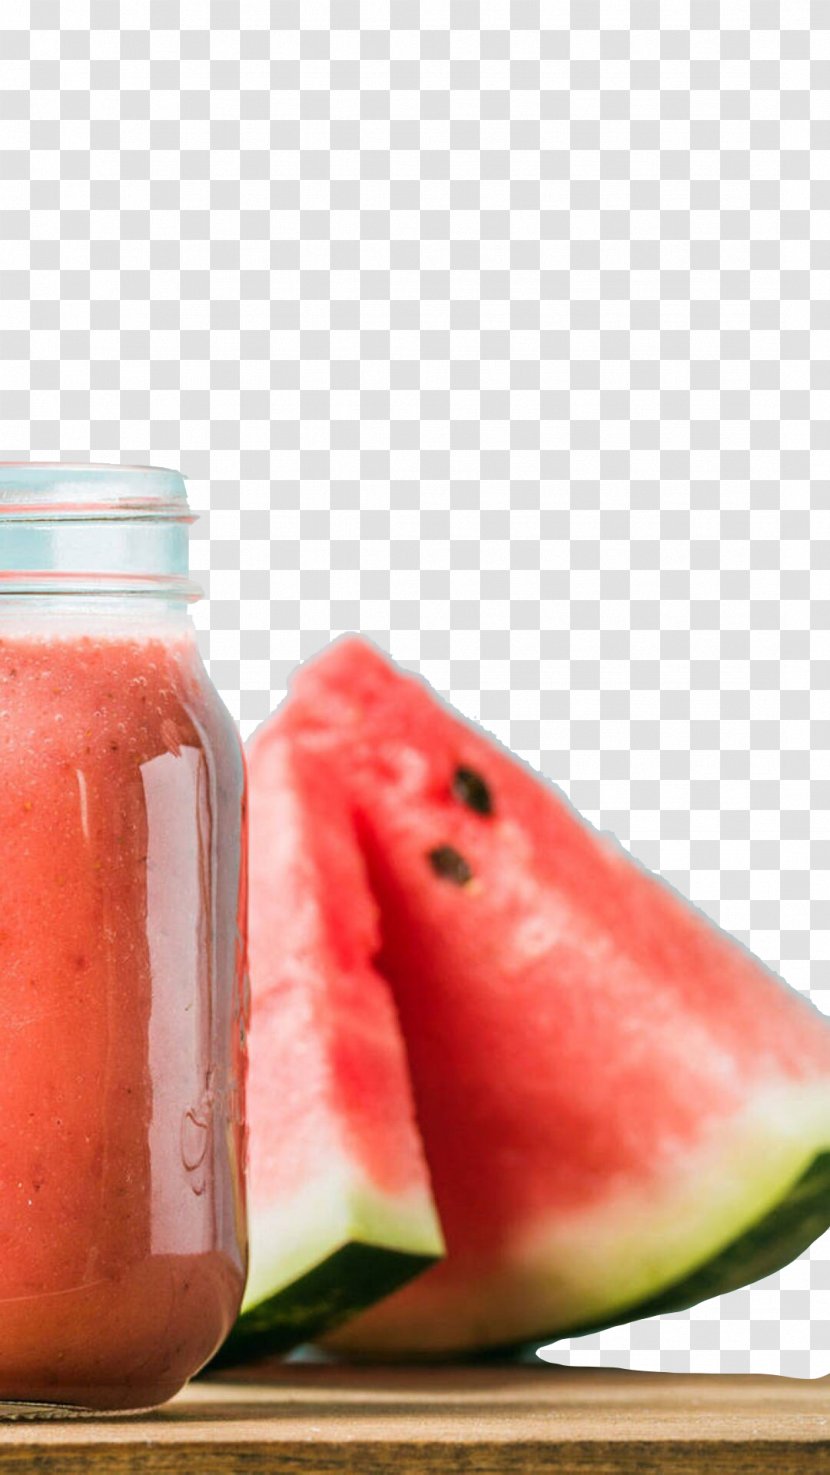 Smoothie Juice Milkshake Iced Tea Watermelon - Sweetness - Smoothies Transparent PNG